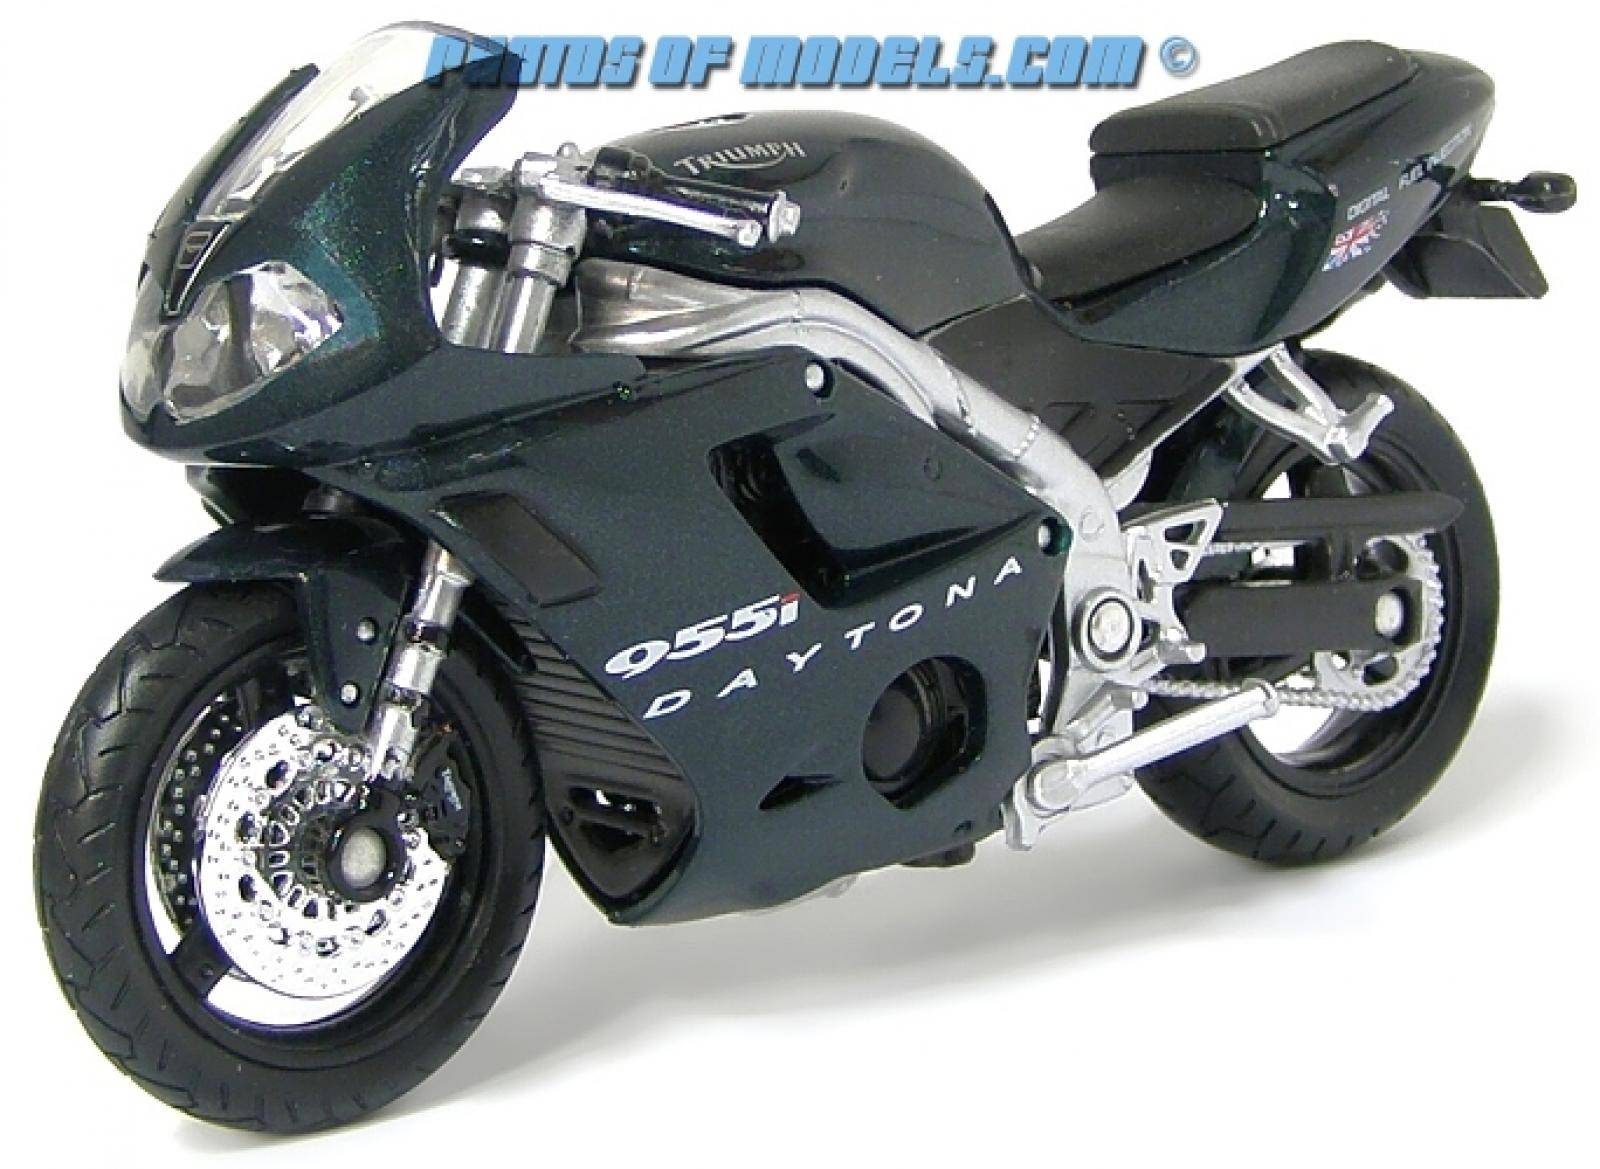 Мотоцикл triumph daytona 955i centennial edition 2002 фото, характеристики, обзор, сравнение на базамото